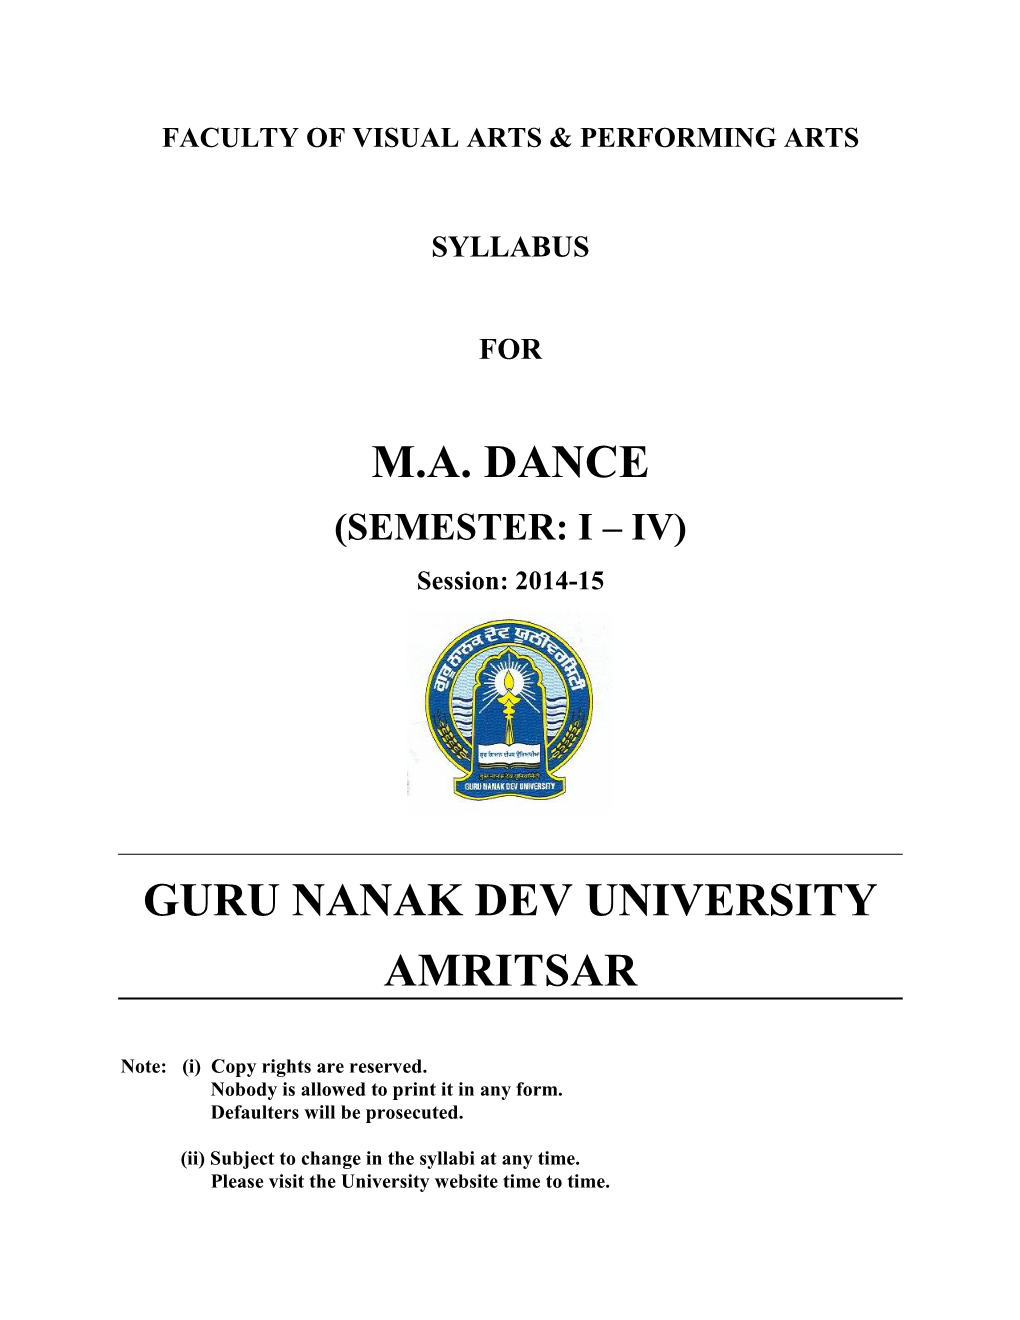 M.A. Dance Guru Nanak Dev University Amritsar